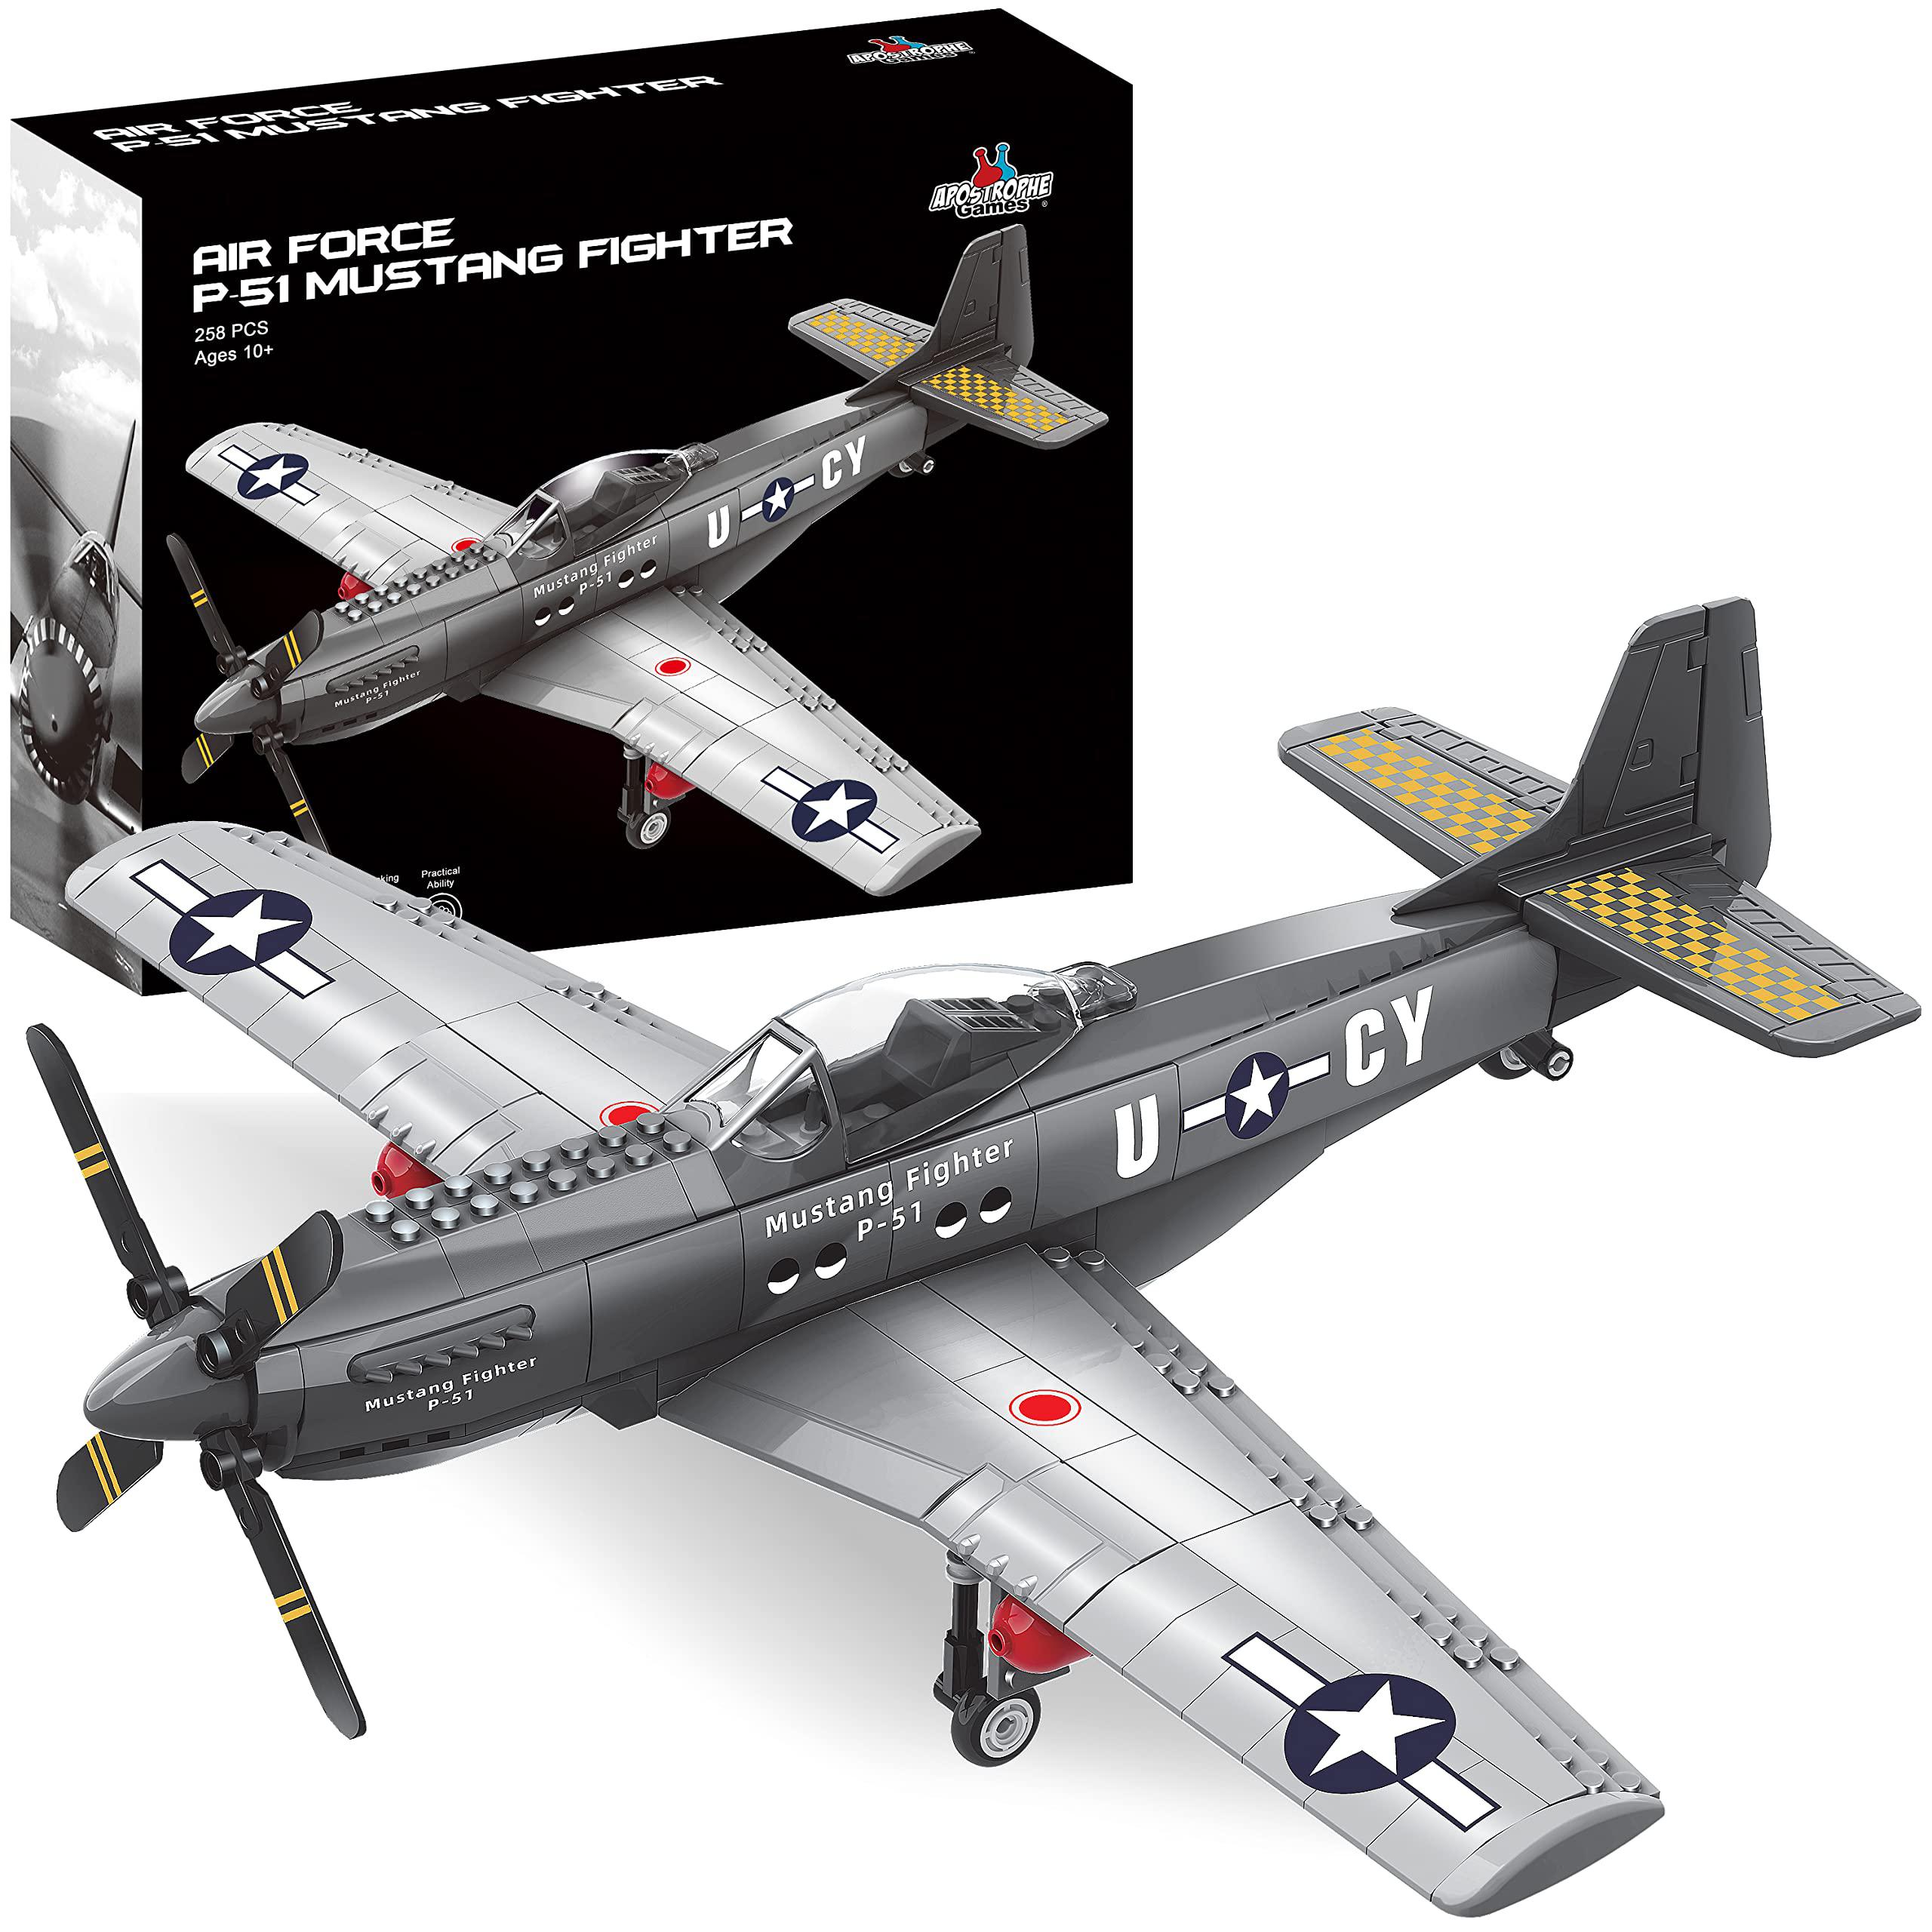 apostrophe games ww2 p-51 mustang fighter plane building block set - 258 -pcs building toys set - plane toy for kids older th